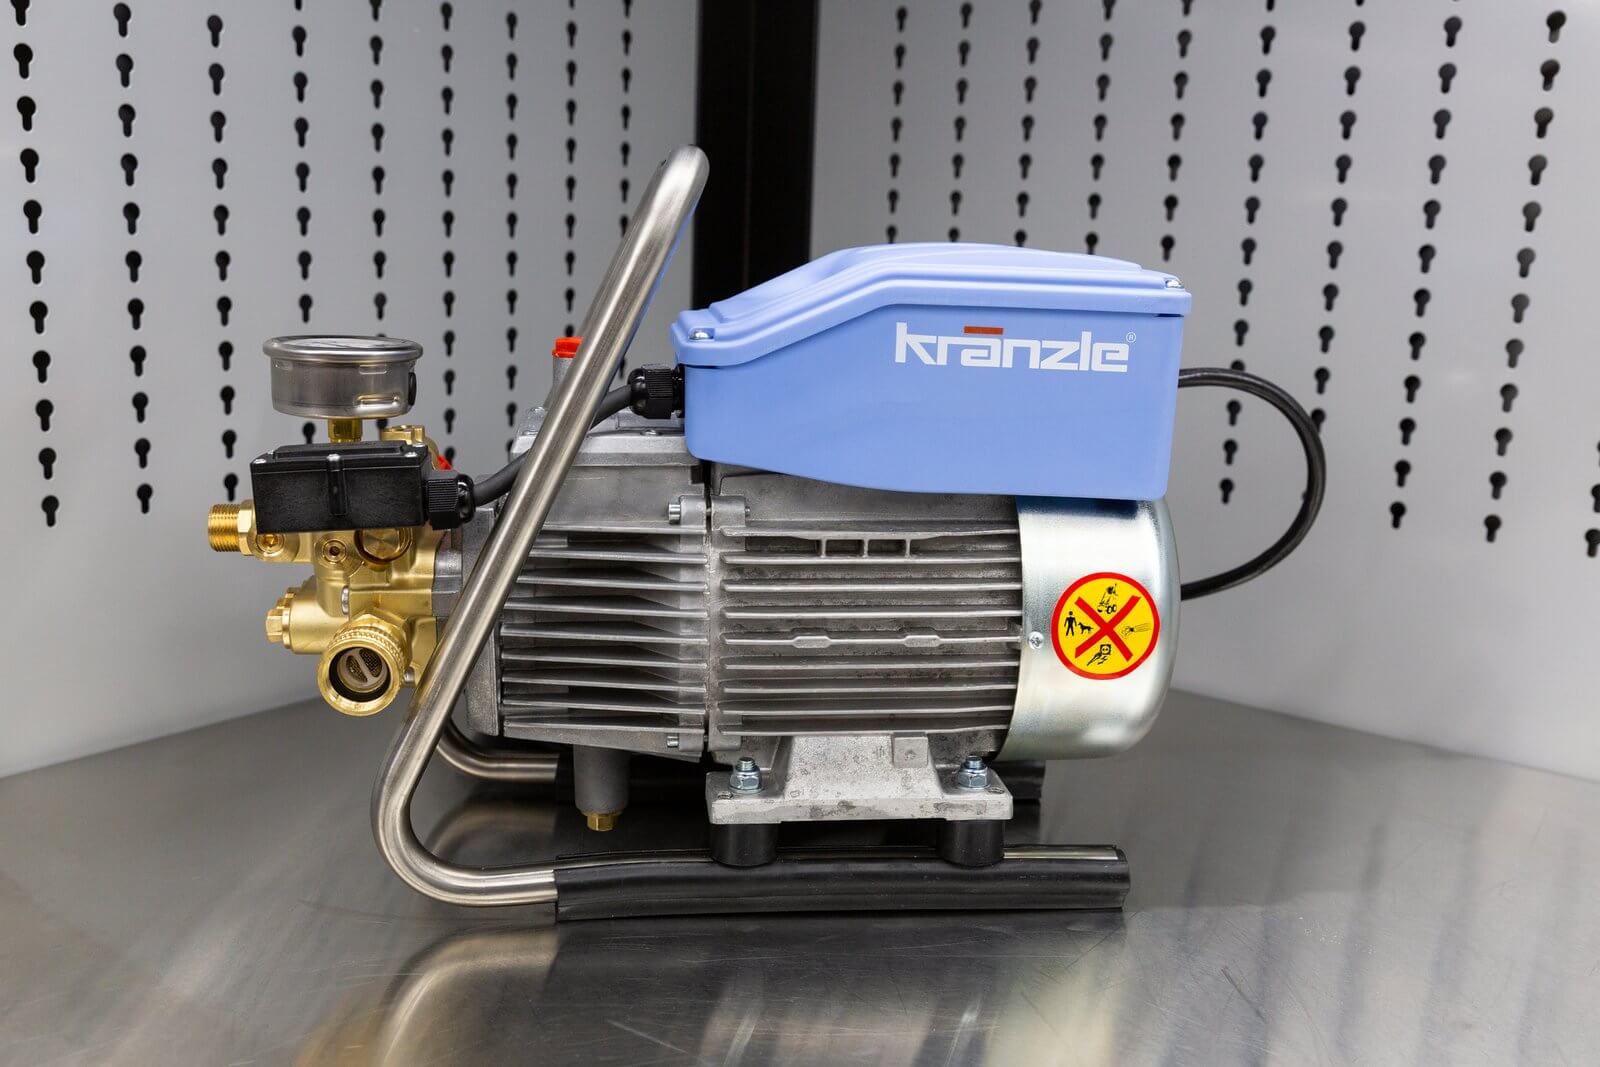 Kranzle K1322TS Pressure Washer Product Image